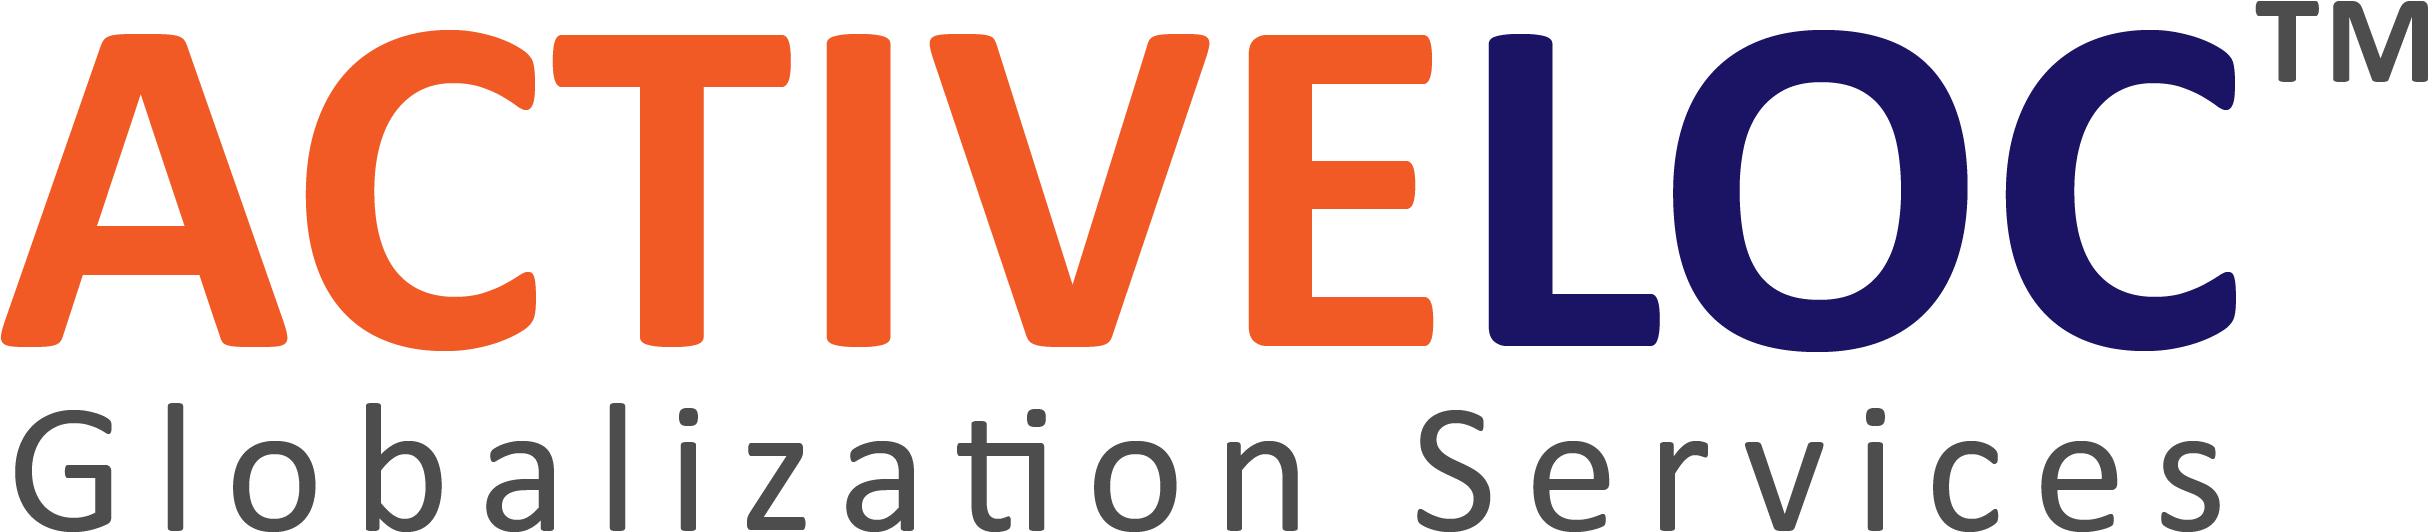 Active Loc Globalization Services Logo